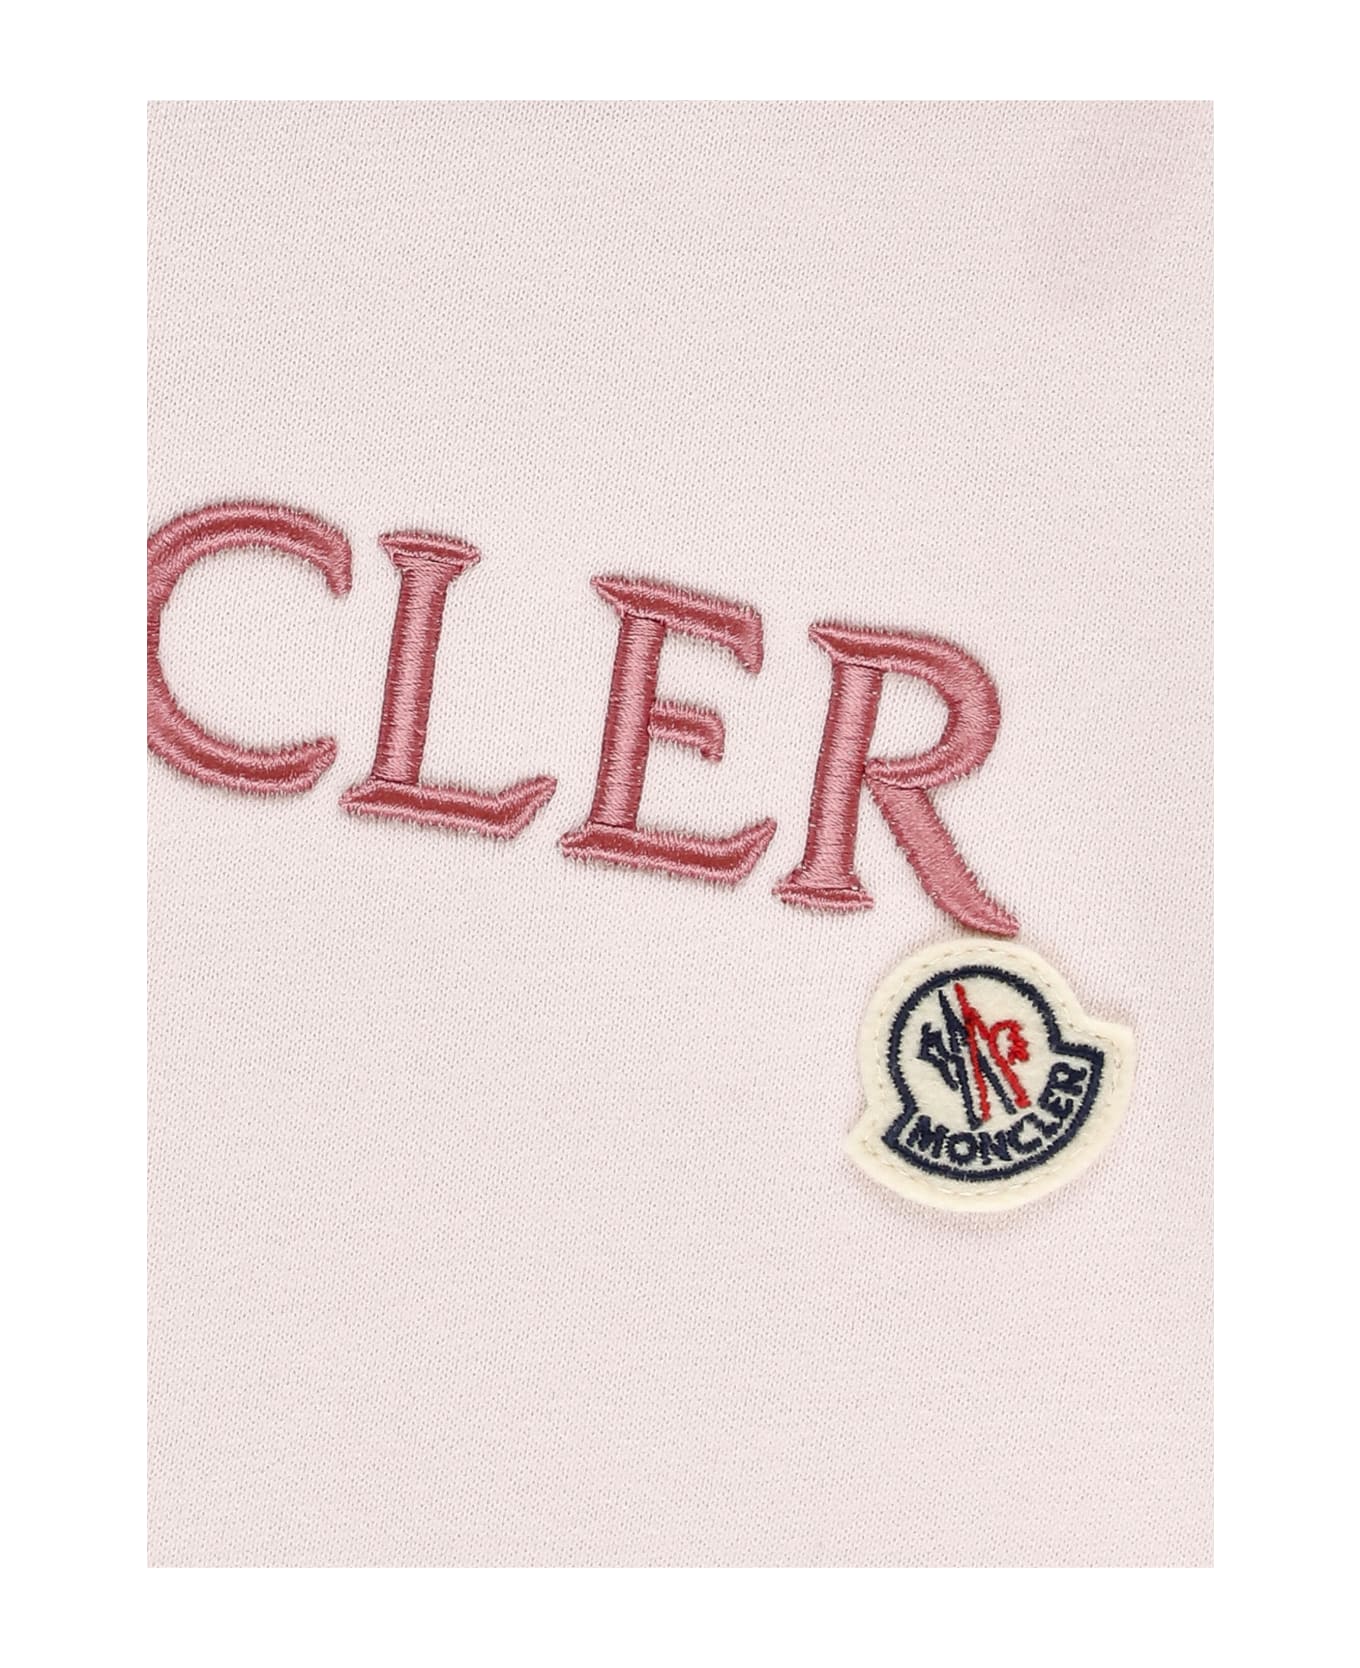 Moncler Hoodie With Logo - Pink ニットウェア＆スウェットシャツ